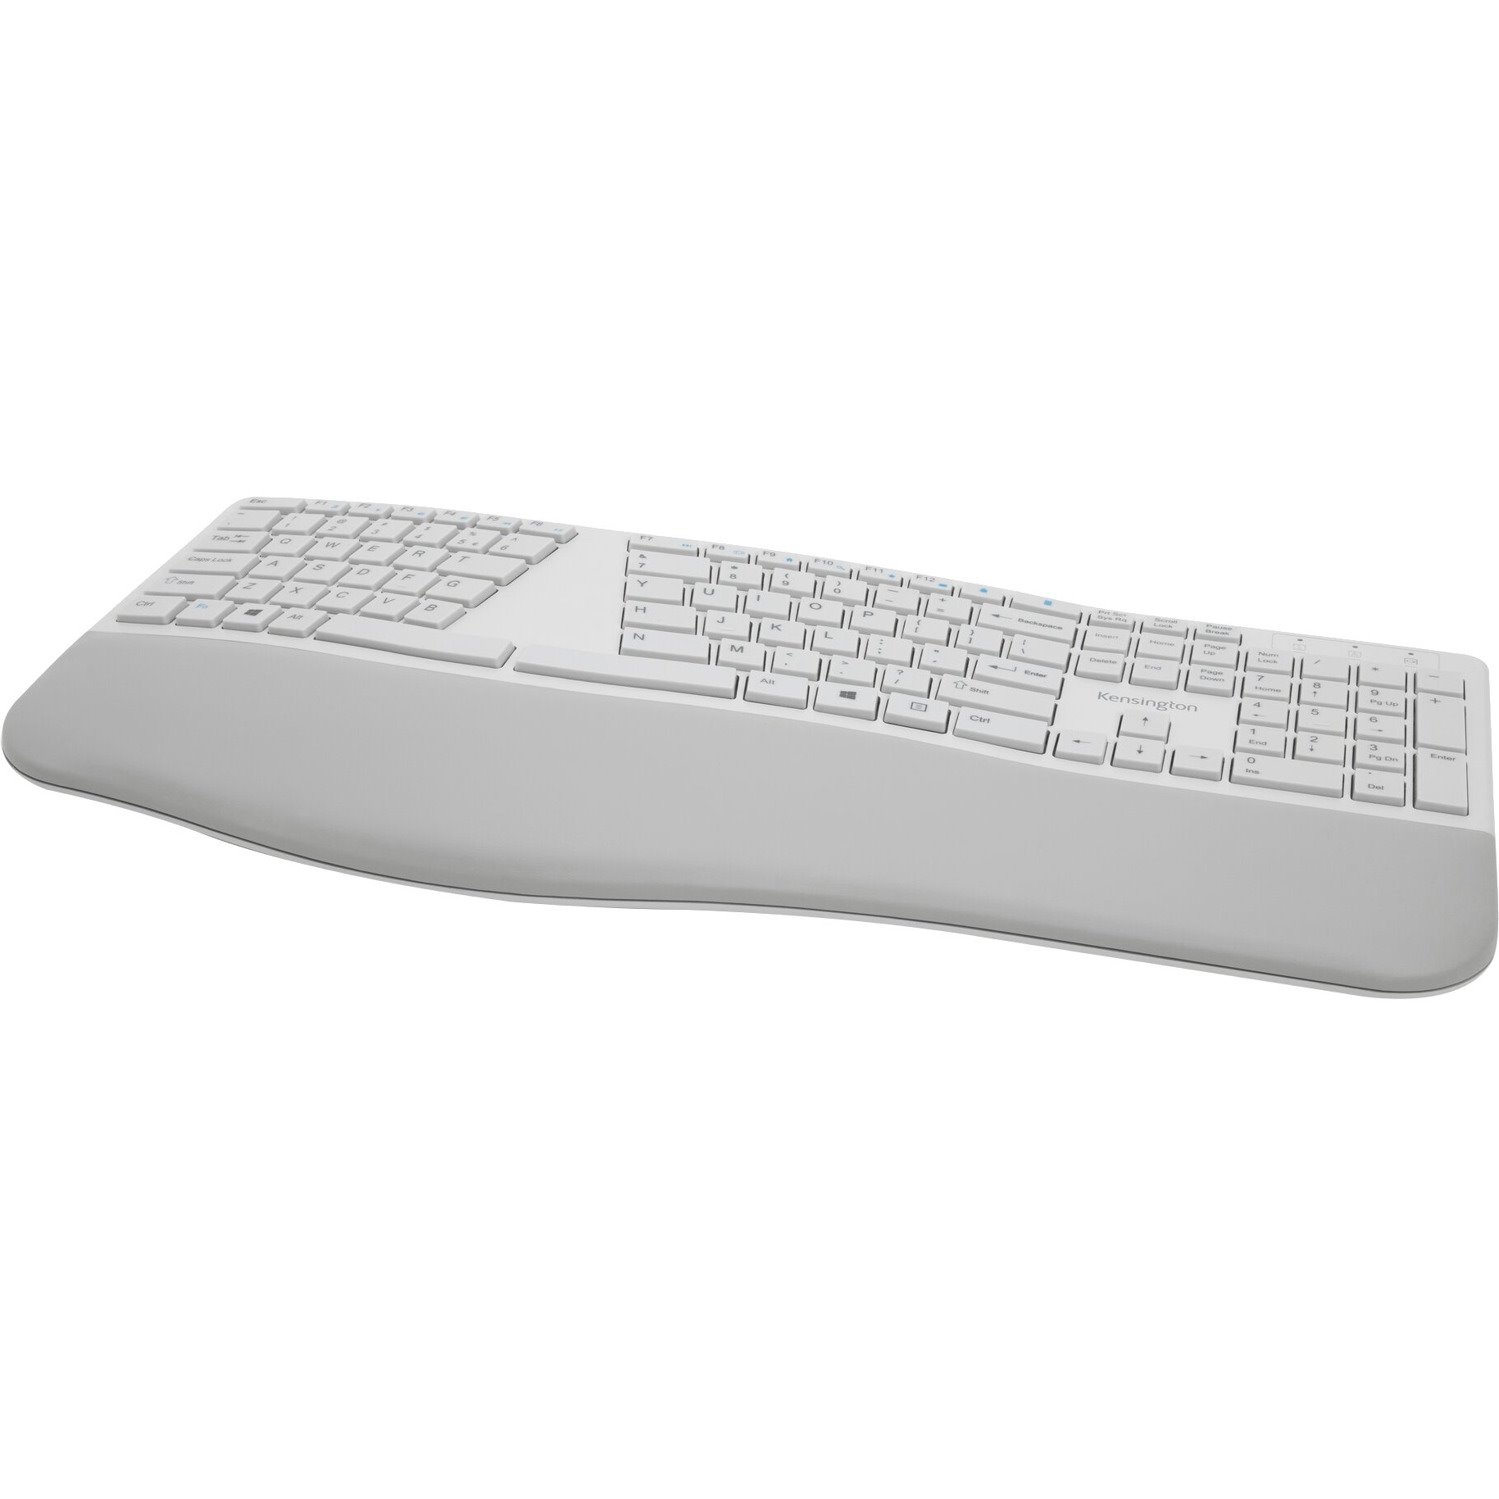 Kensington Pro Fit Keyboard - Wireless Connectivity - USB Interface - Grey